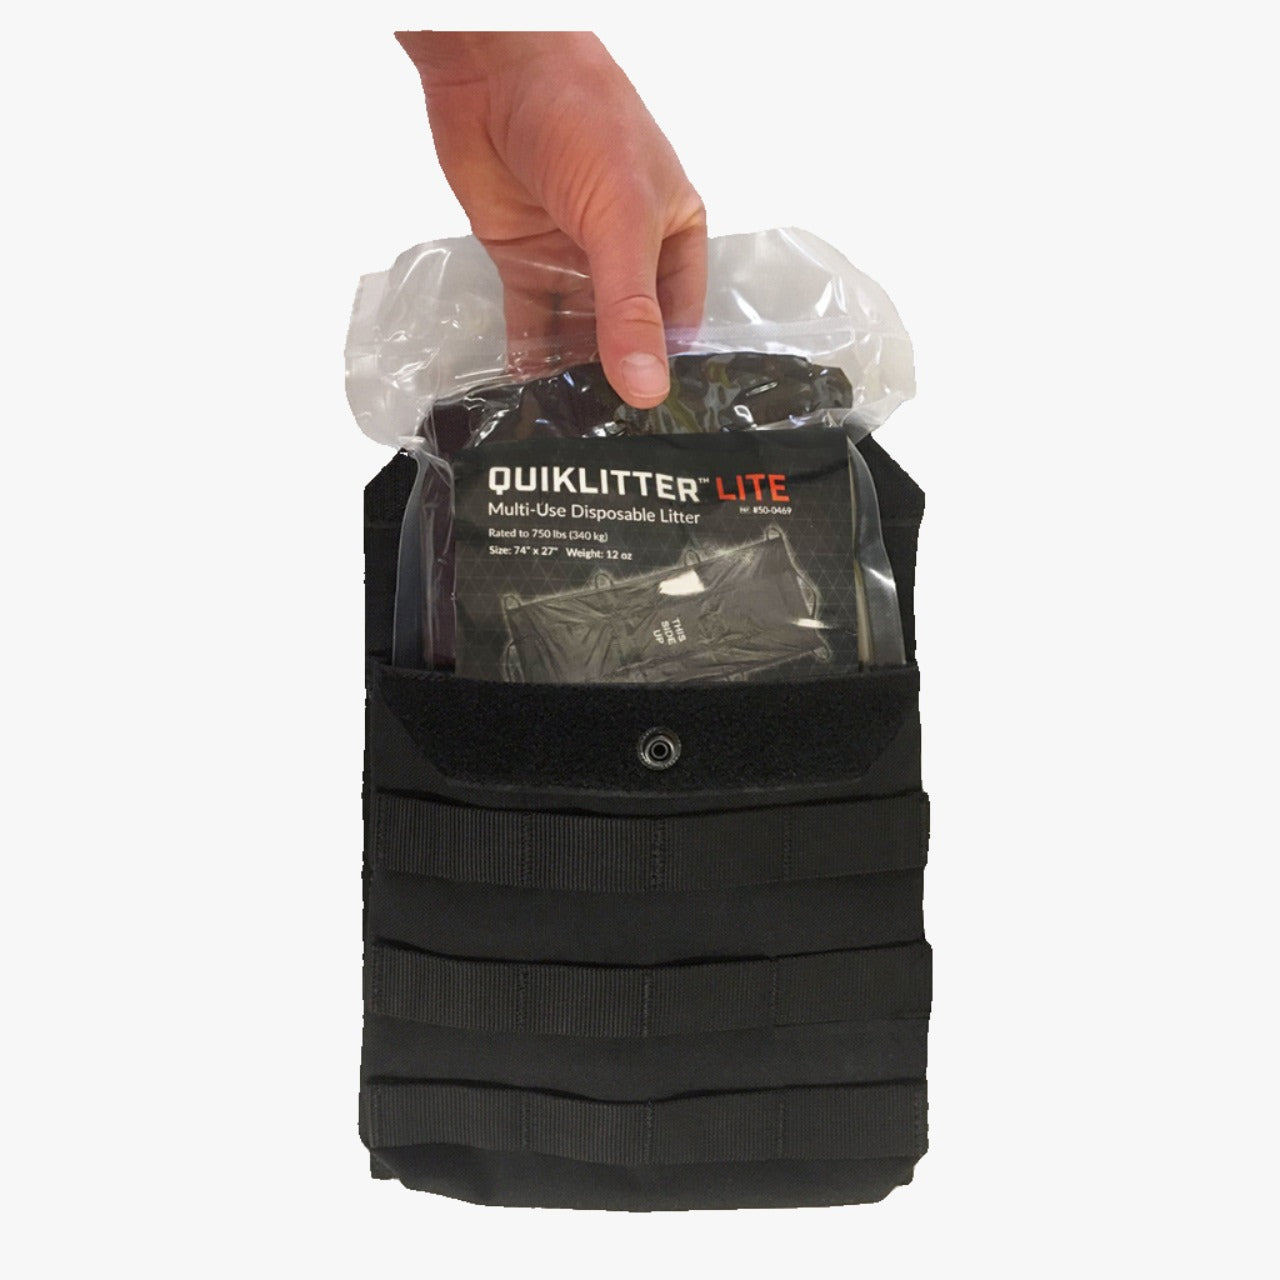 Rescue Essentials Quiklitter Lite Evacuation Stretcher